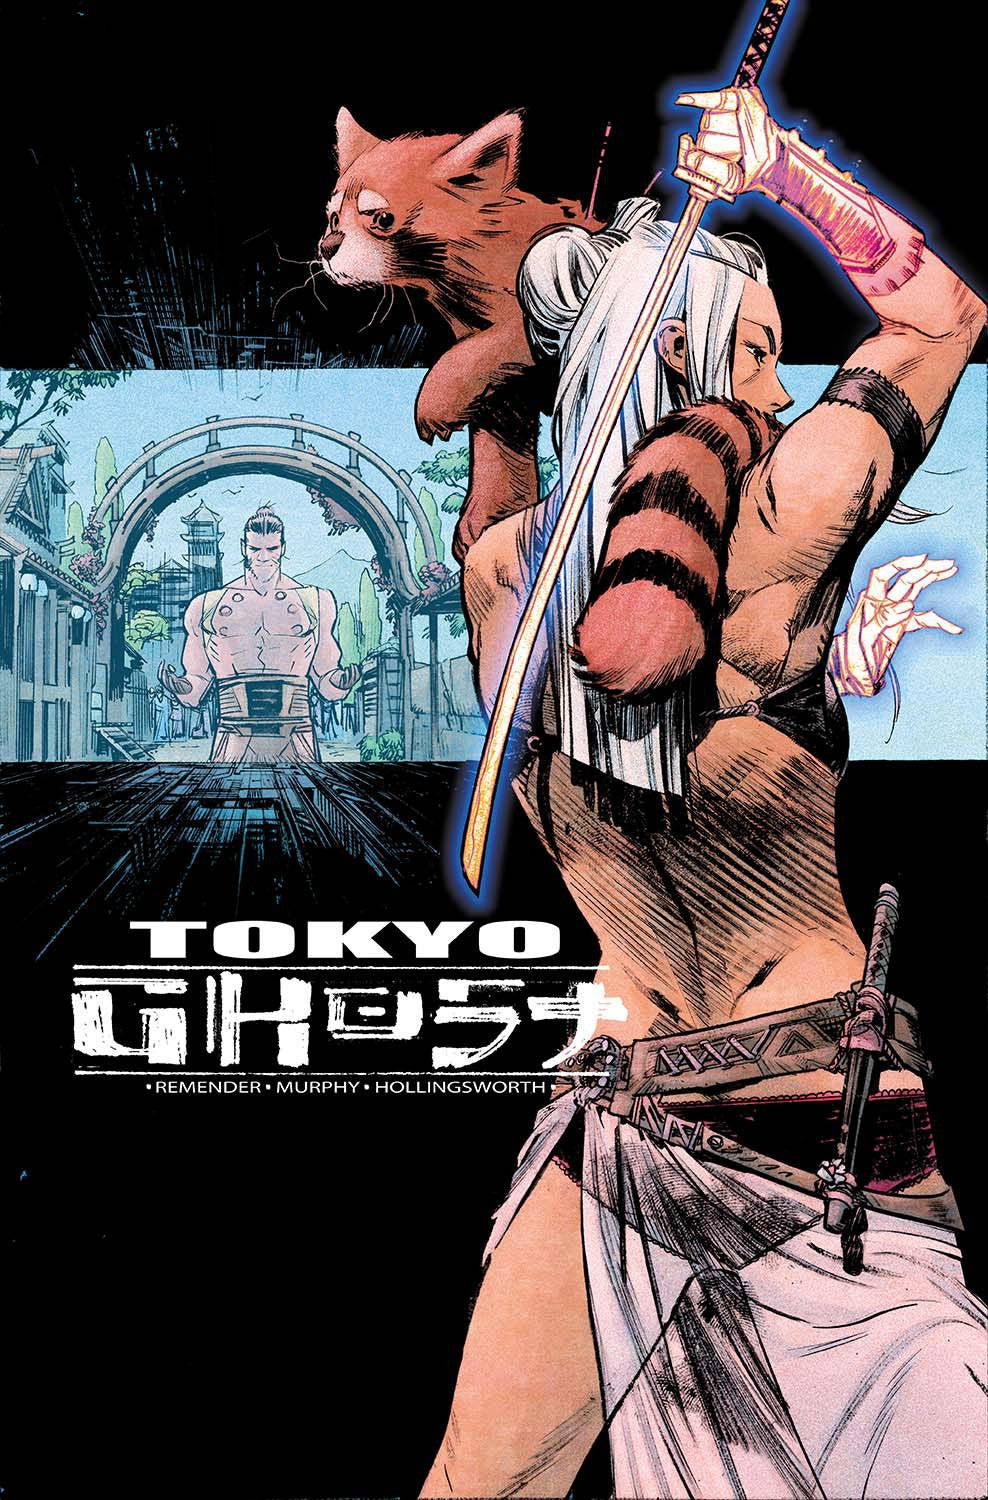 TOKYO GHOST #10 CVR A MURPHY & HOLLINGSWORTH (MR) COVER